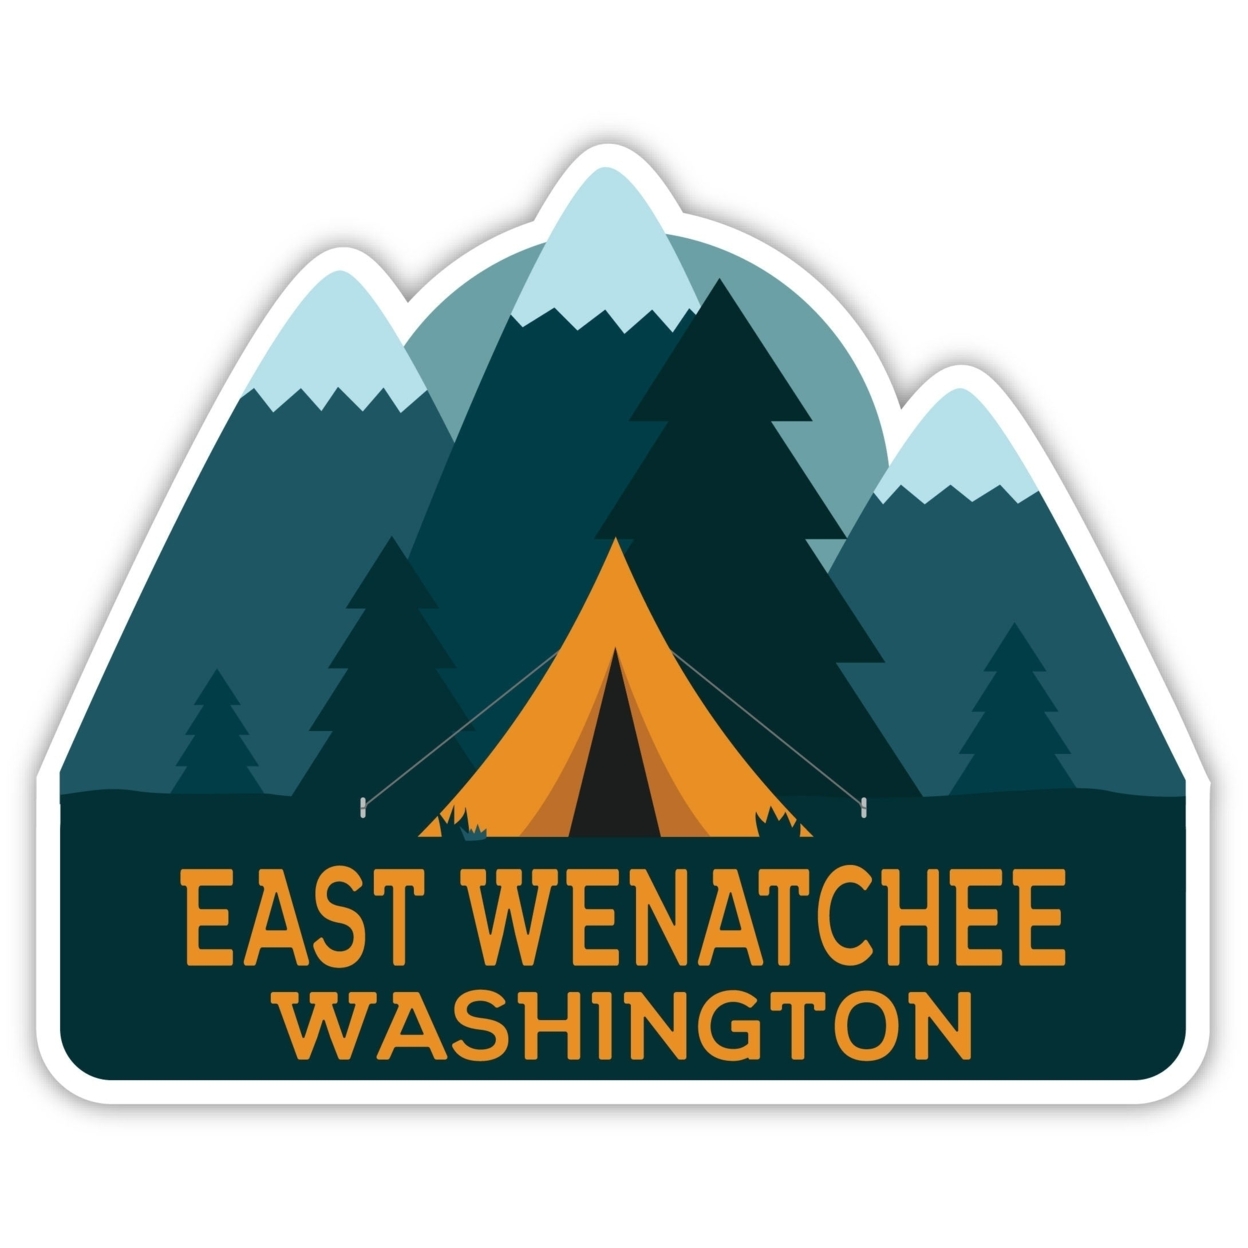 East Wenatchee Washington Souvenir Decorative Stickers (Choose Theme And Size) - 4-Pack, 4-Inch, Tent